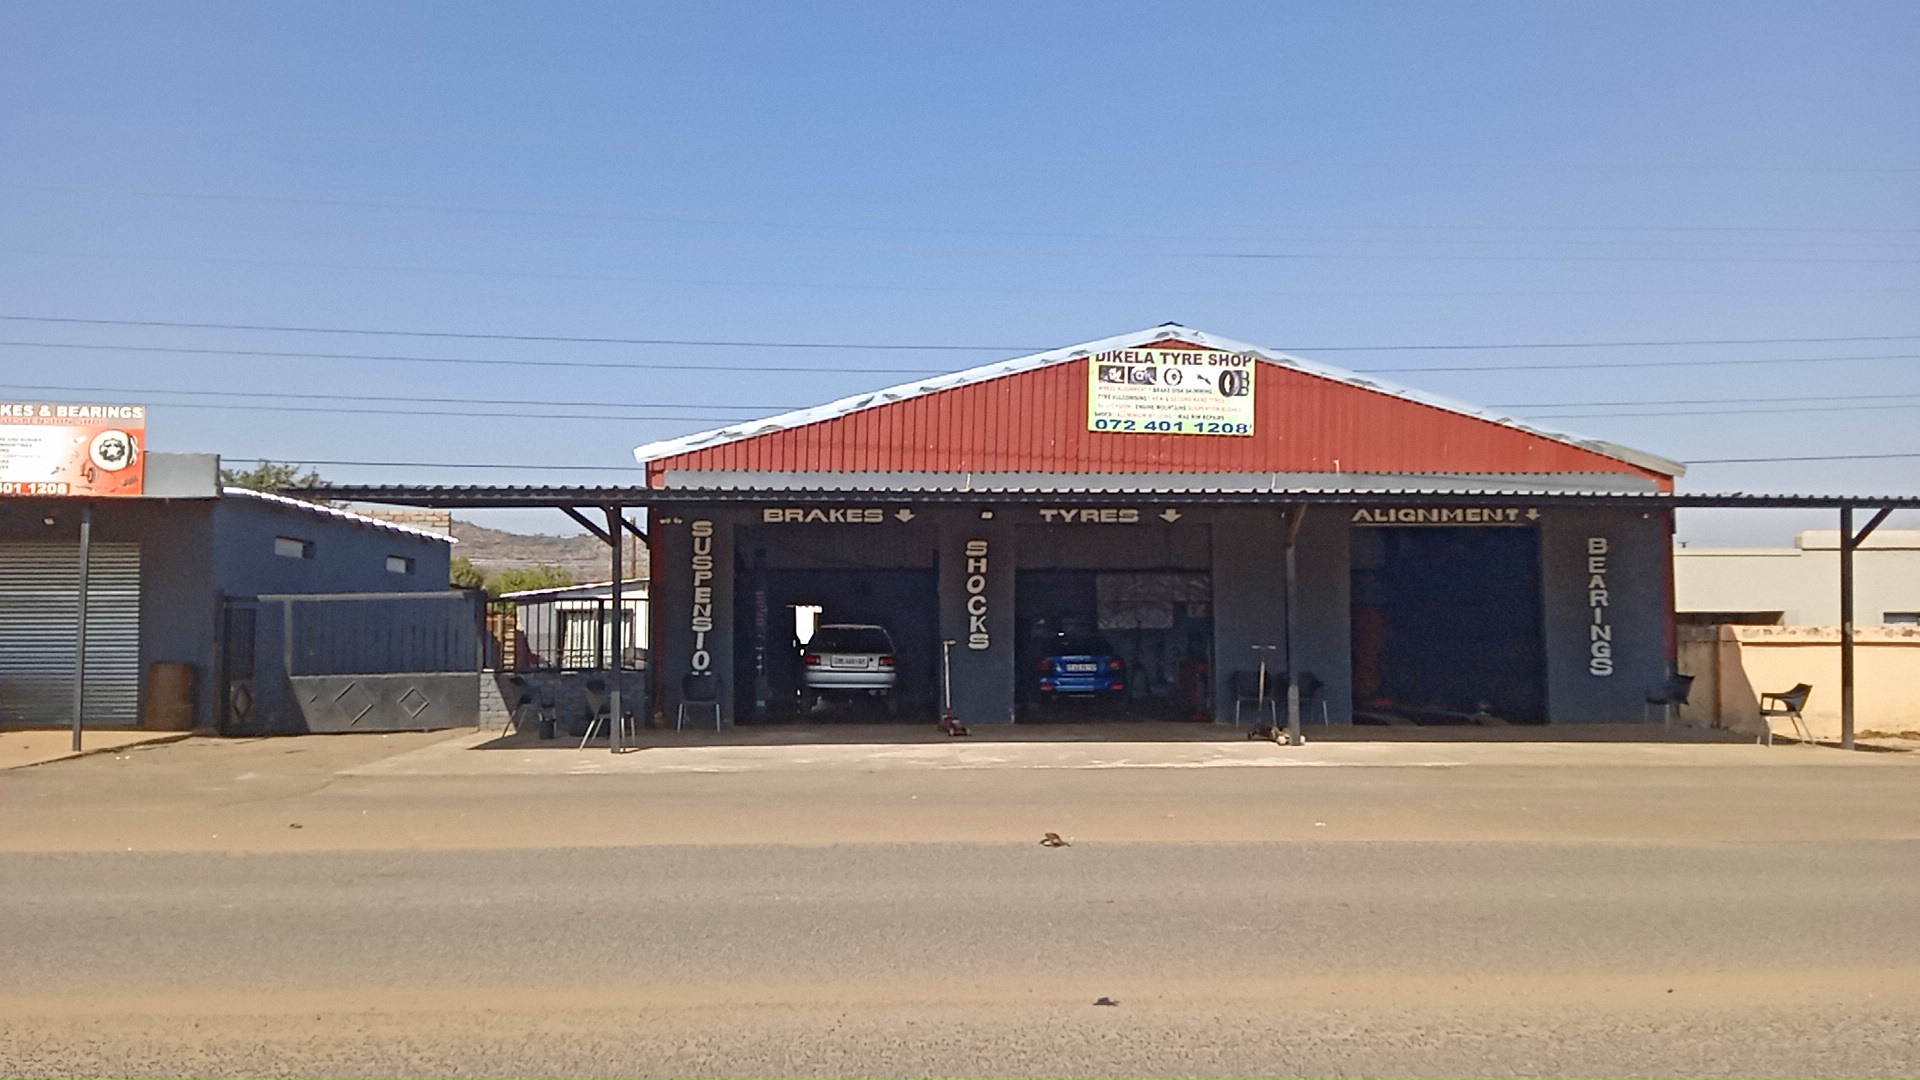 Dikela Tyre Shop